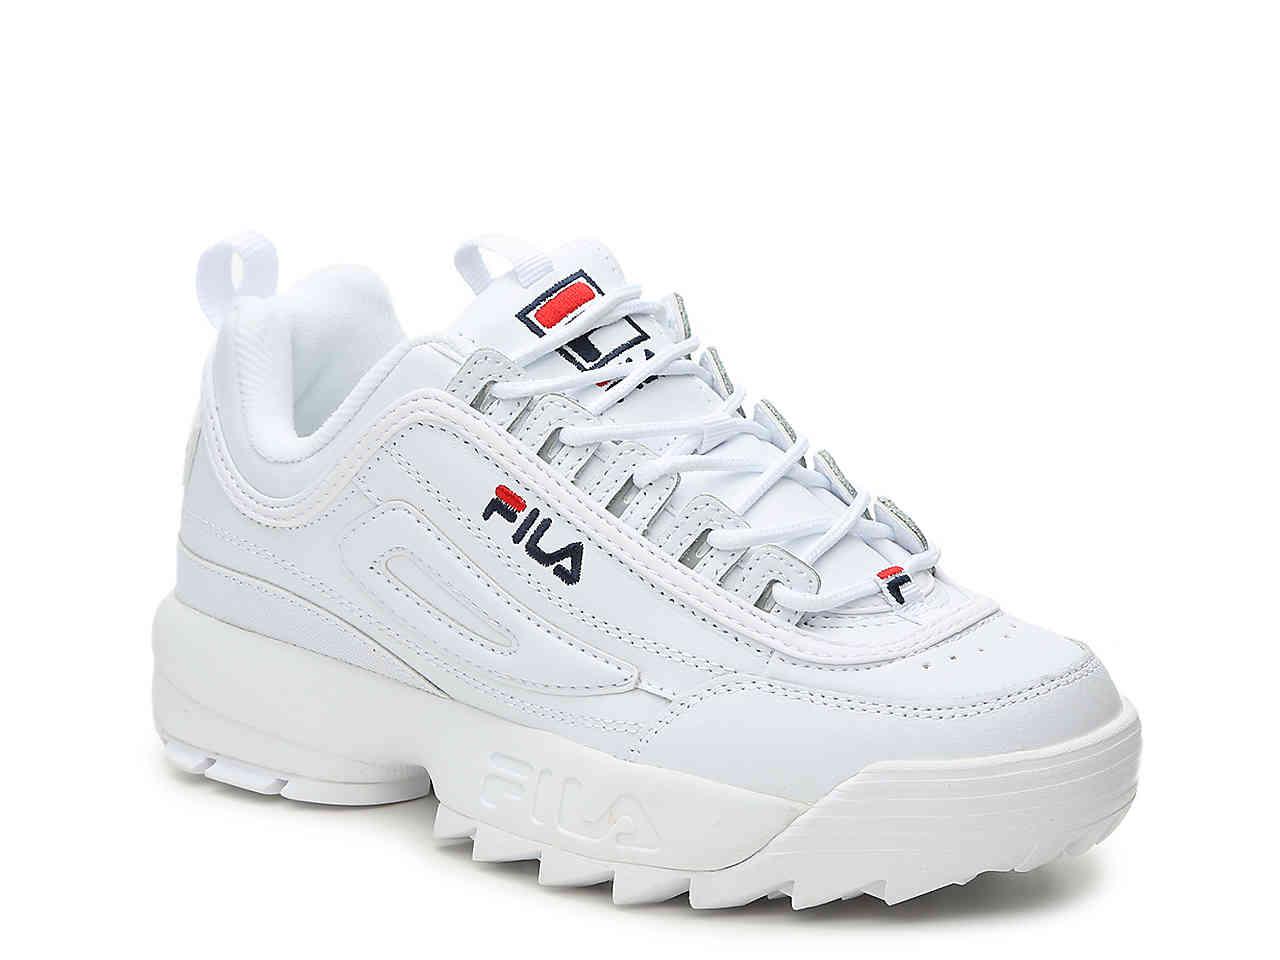 Fila Leather Disruptor Ii Premium Sneaker in White - Save 38% - Lyst